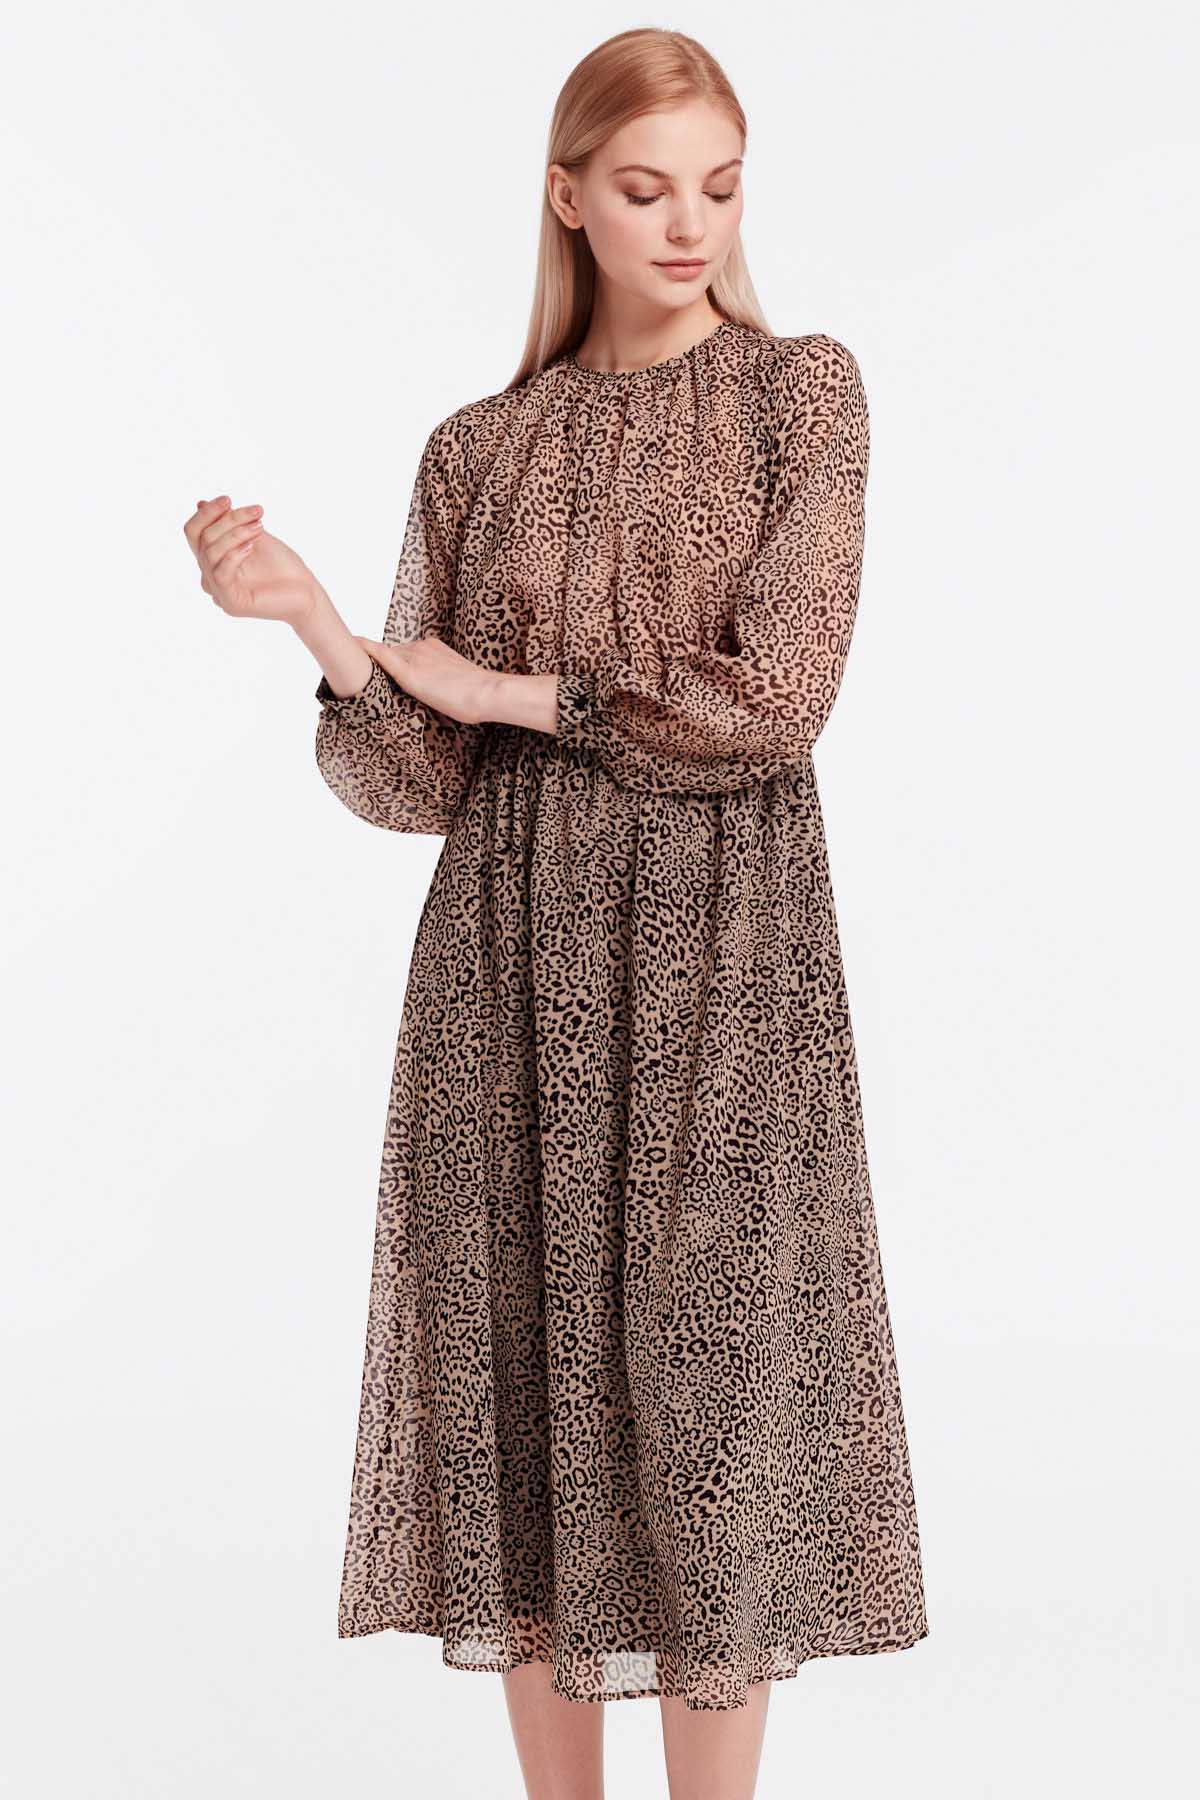 Midi dress with leopard print, photo 2